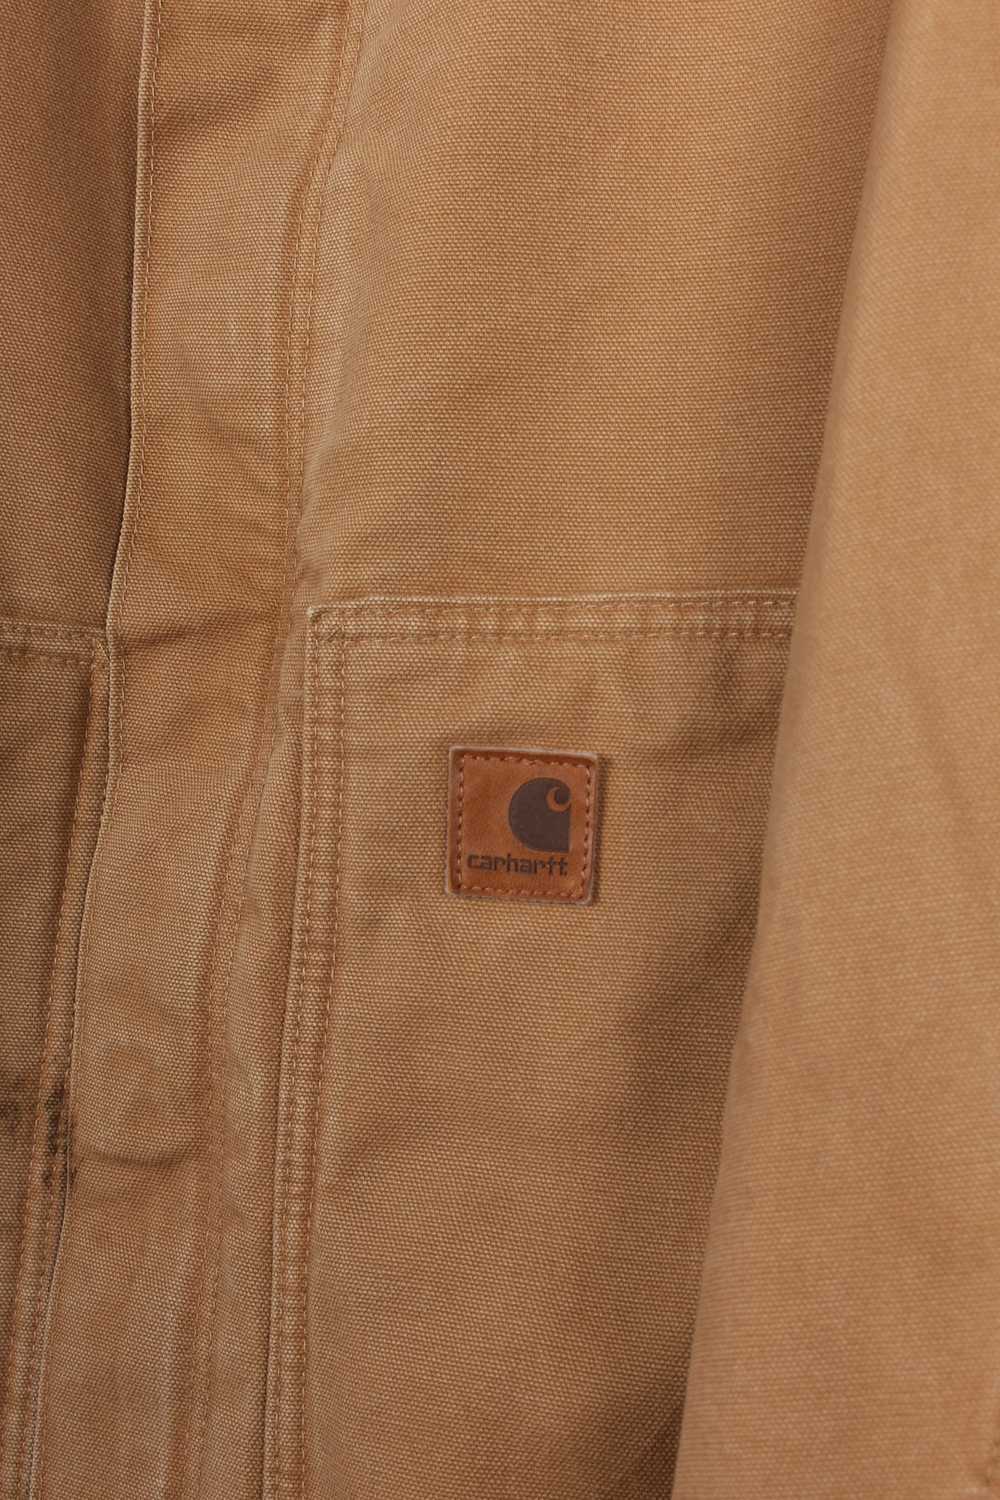 Vintage Carhartt Jacket Beige XL - image 2